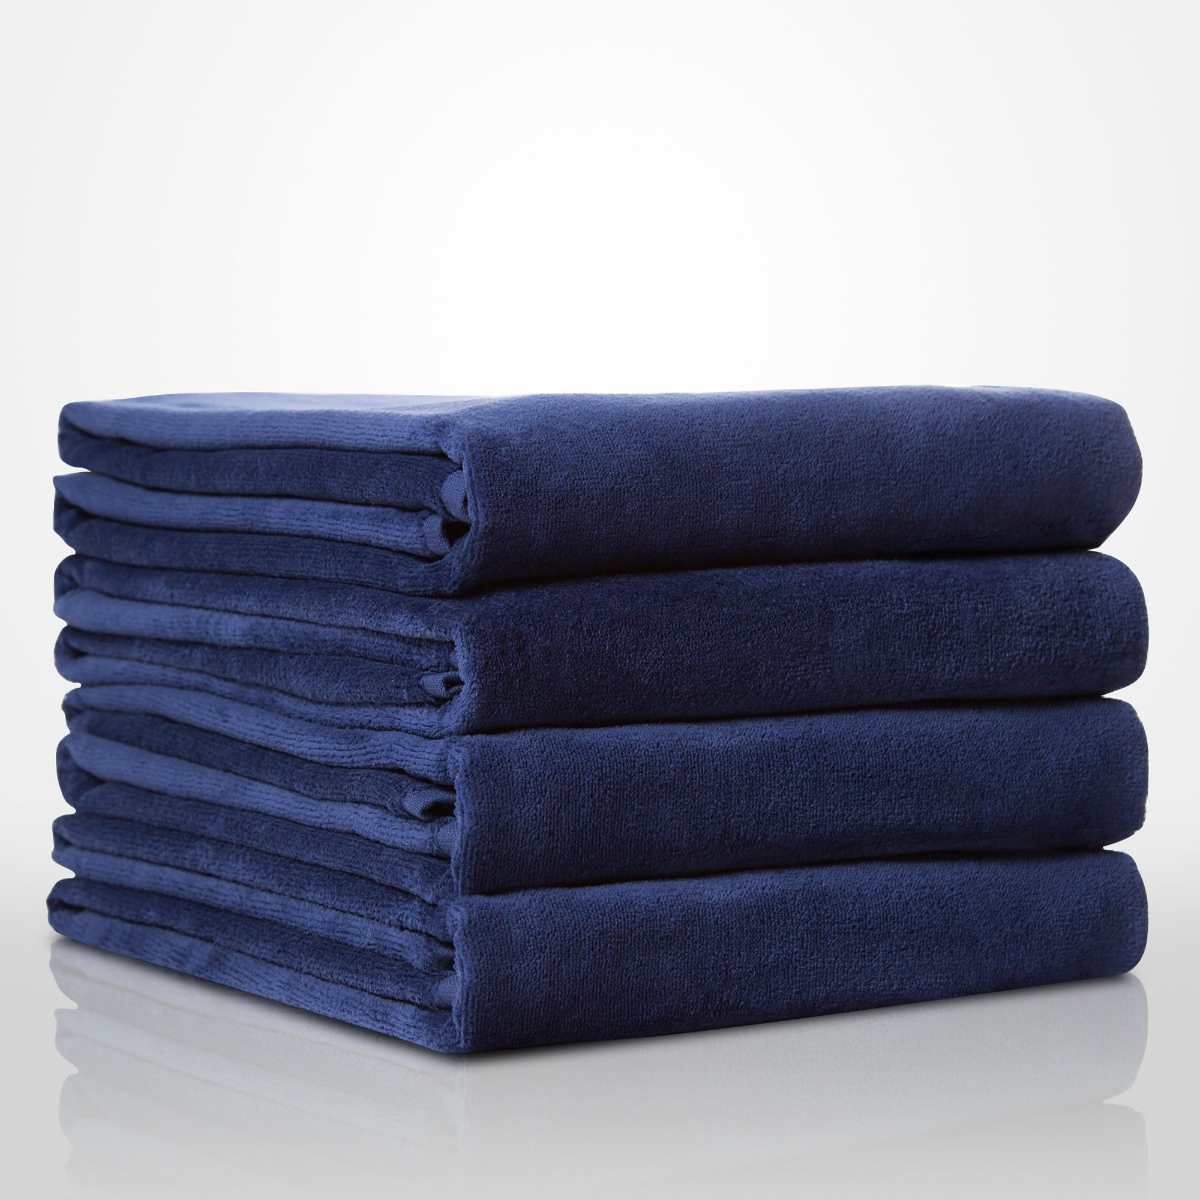 https://robemart.com/blog/wp-content/webpc-passthru.php?src=https://robemart.com/blog/wp-content/uploads/2019/10/35-x-60-100-turkish-cotton-terry-velour-navy-blue-pool-beach-towel-wholesale-towels.jpg&nocache=1